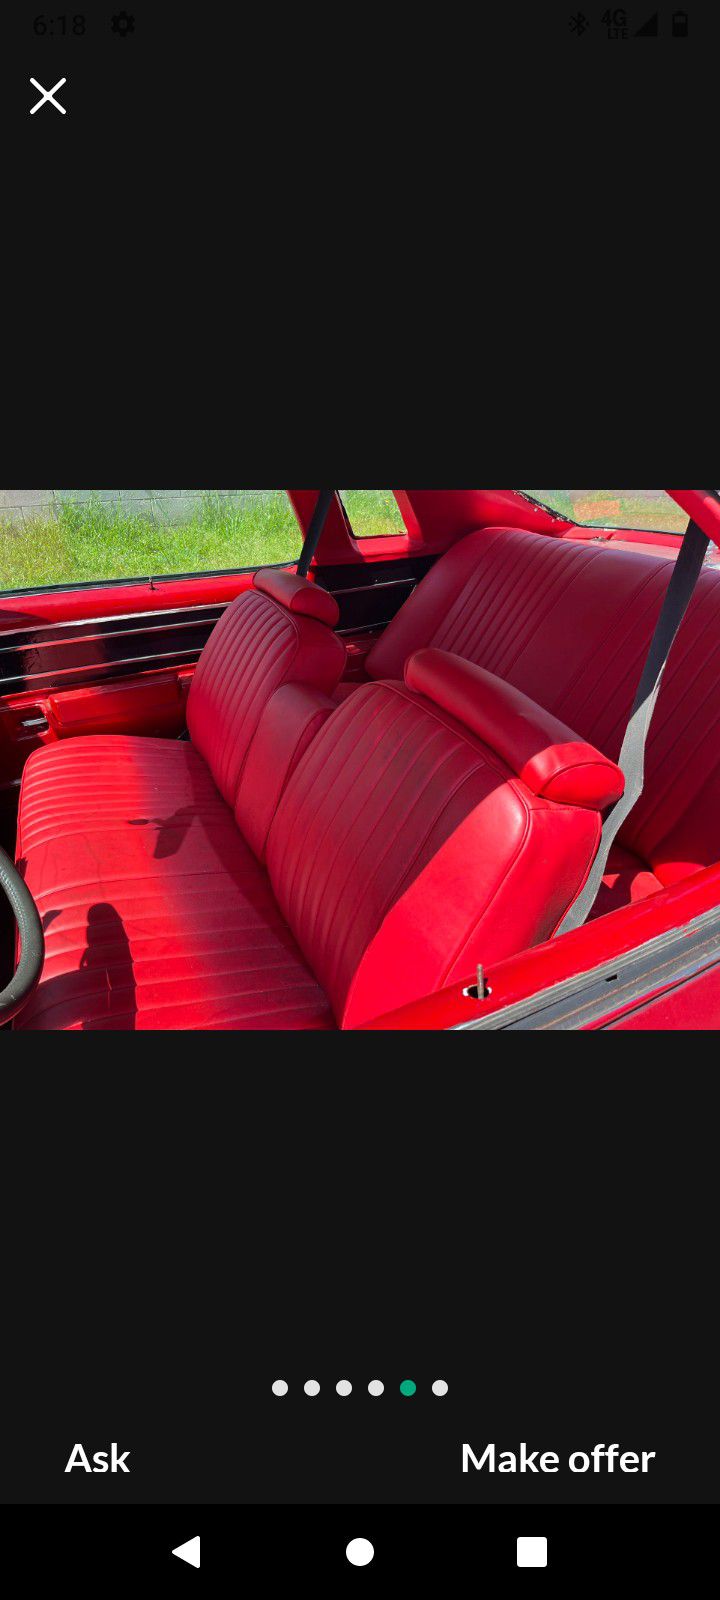 1977 Chevy Malibu Chevelle